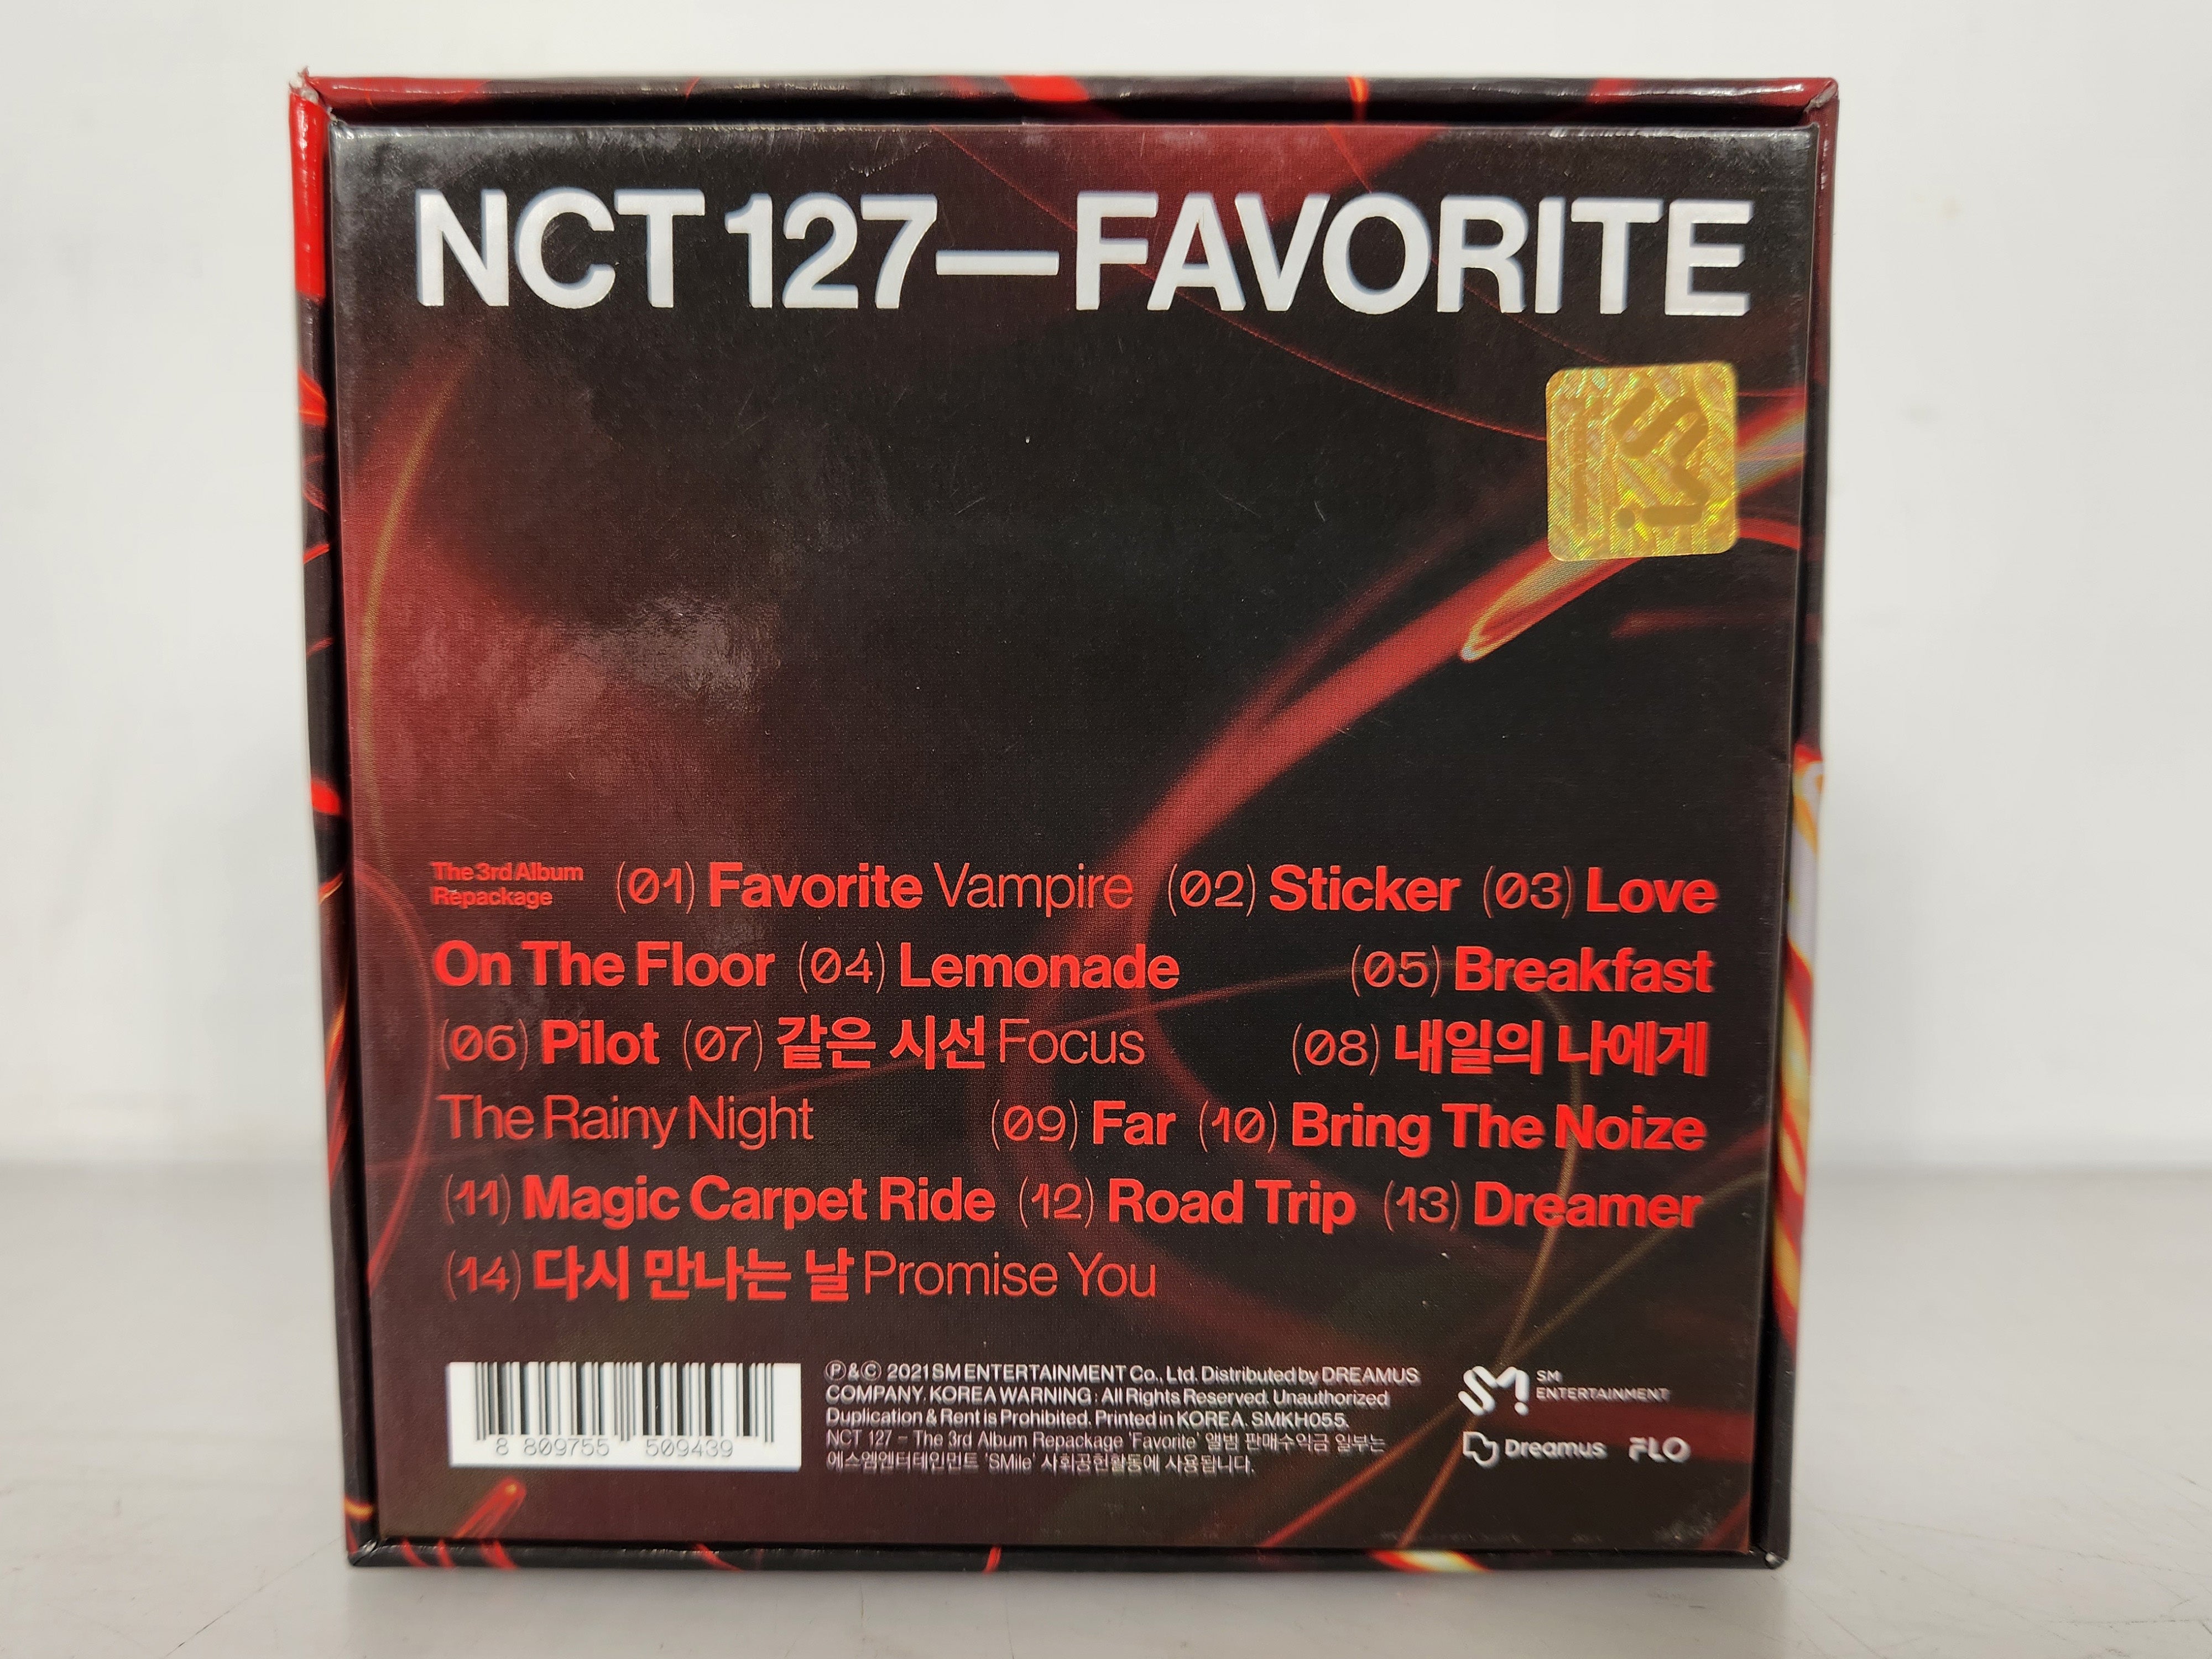 NCT 127 Favorite The 3rd Album Repackage Tragic Version KPOP Kit Album with Folding Photo Insert